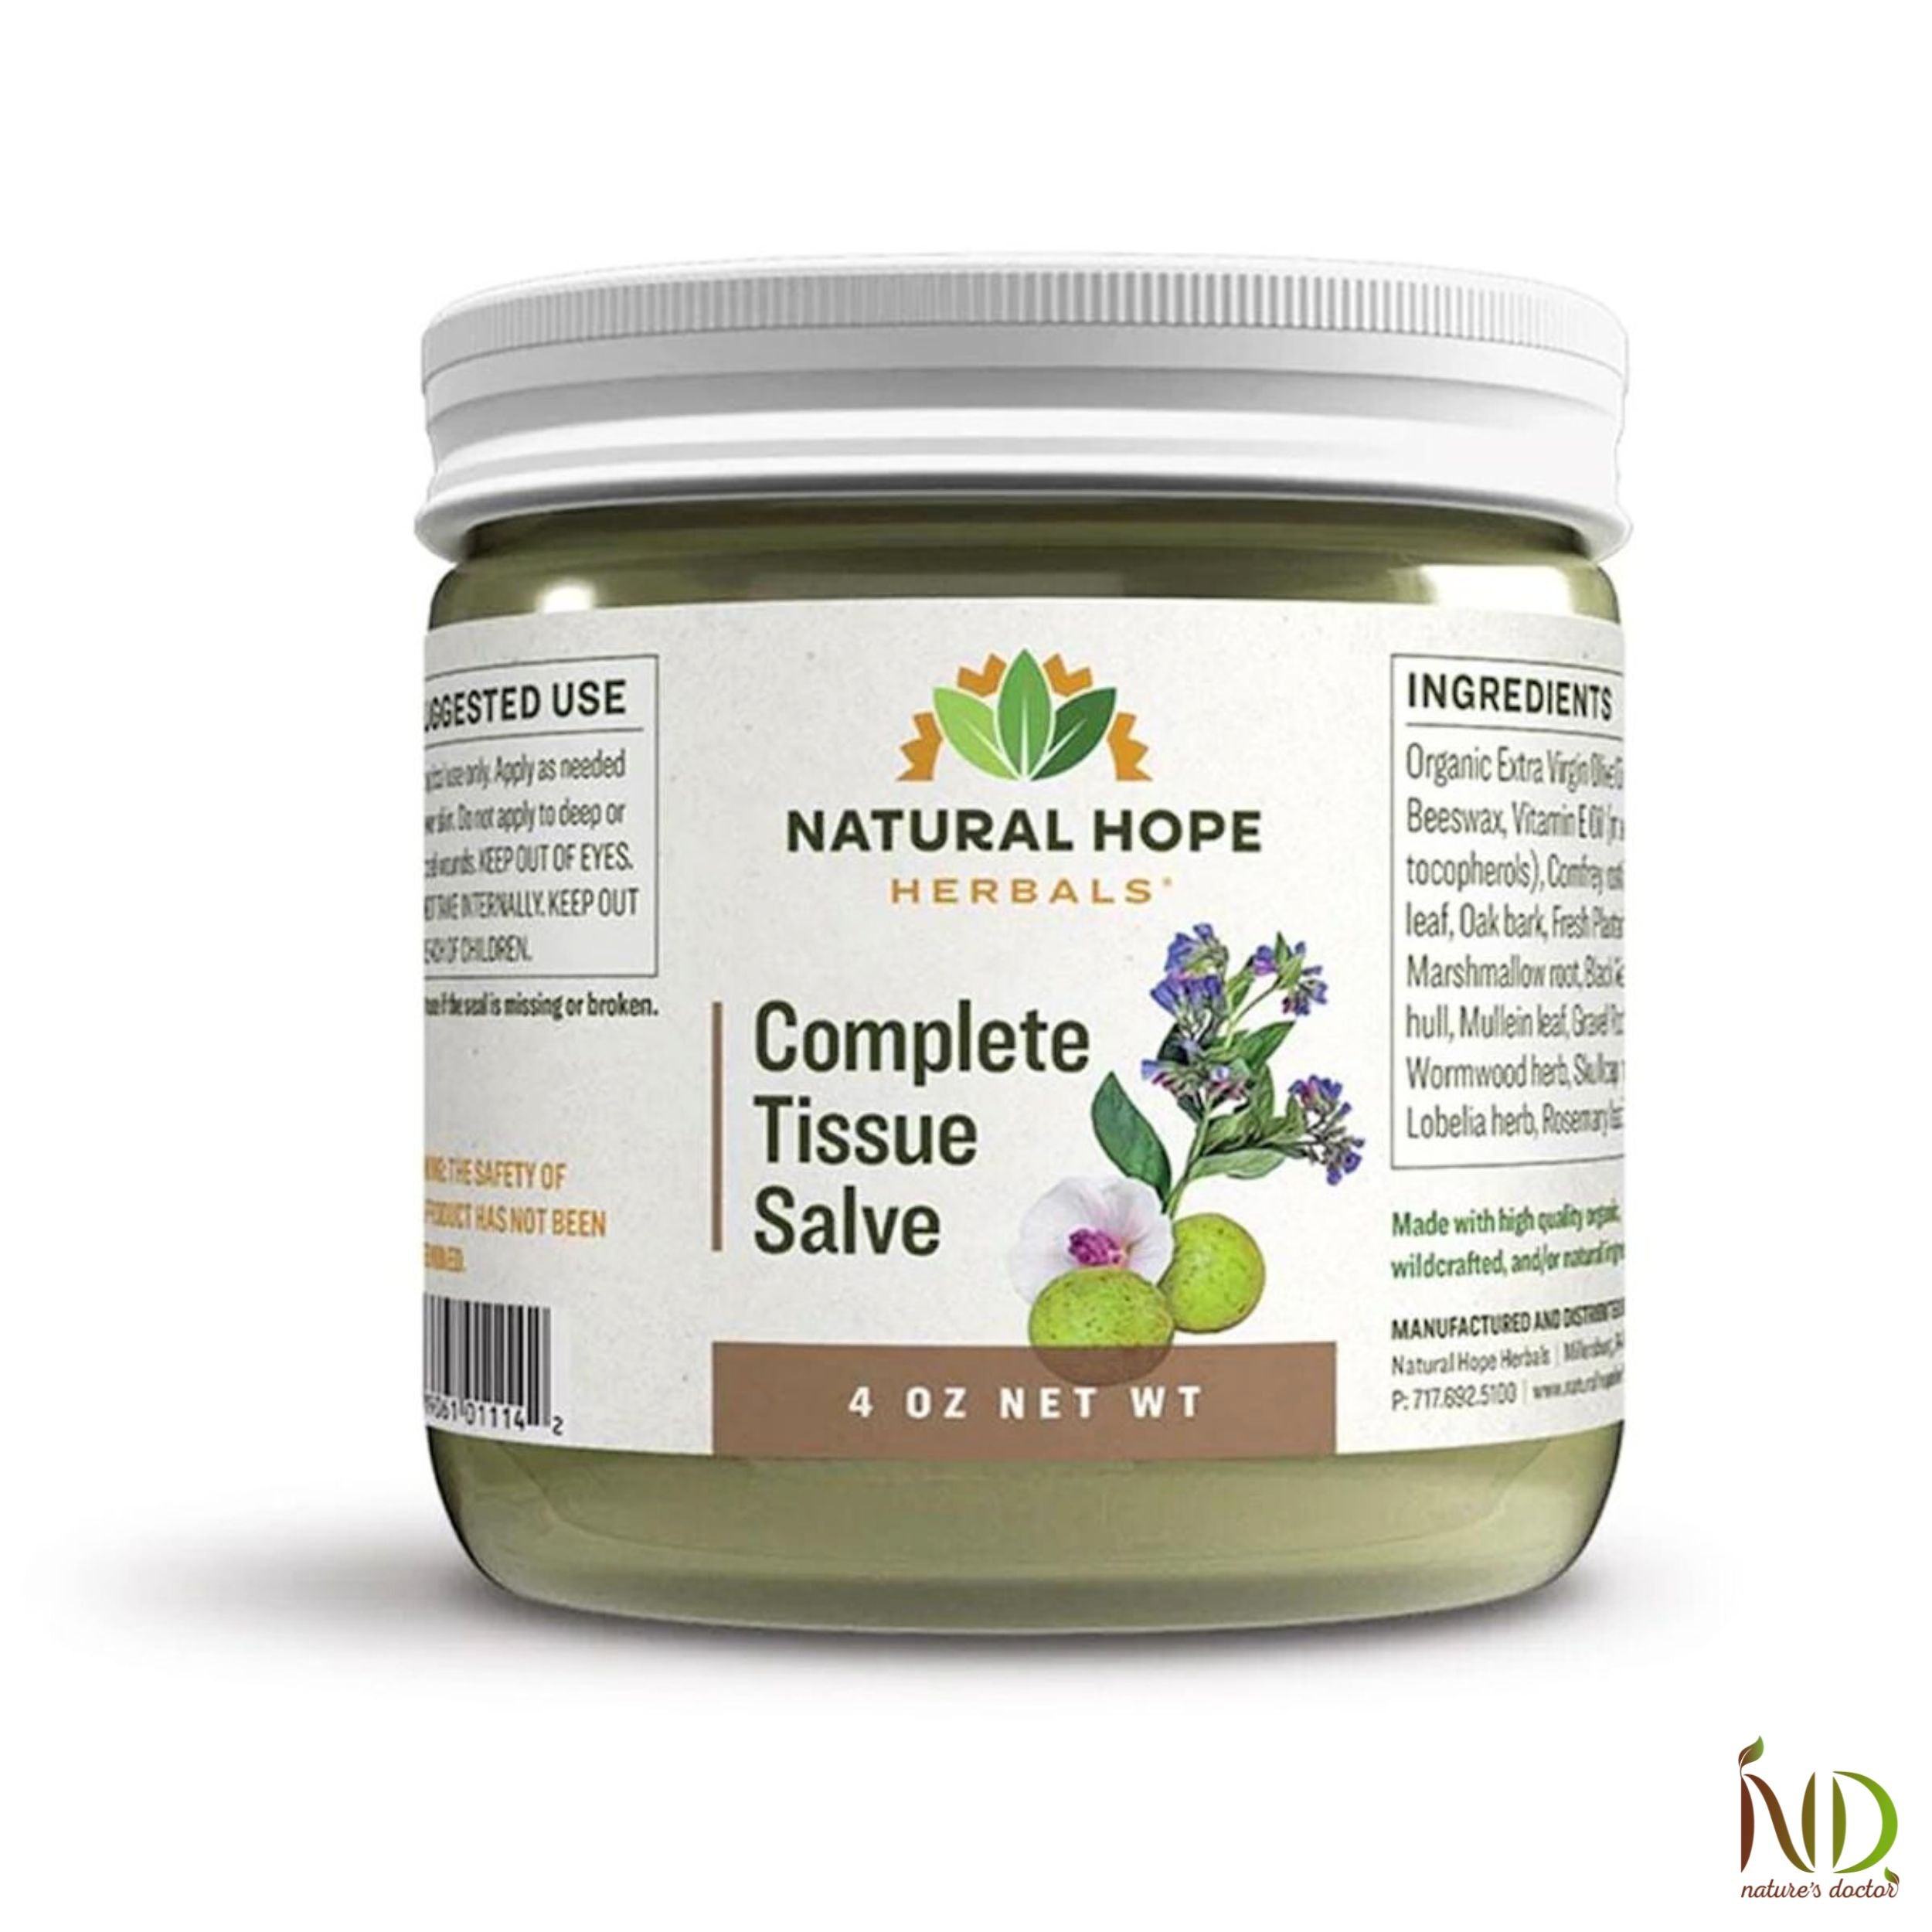 Complete Tissue Salve - Natural Hope Herbals